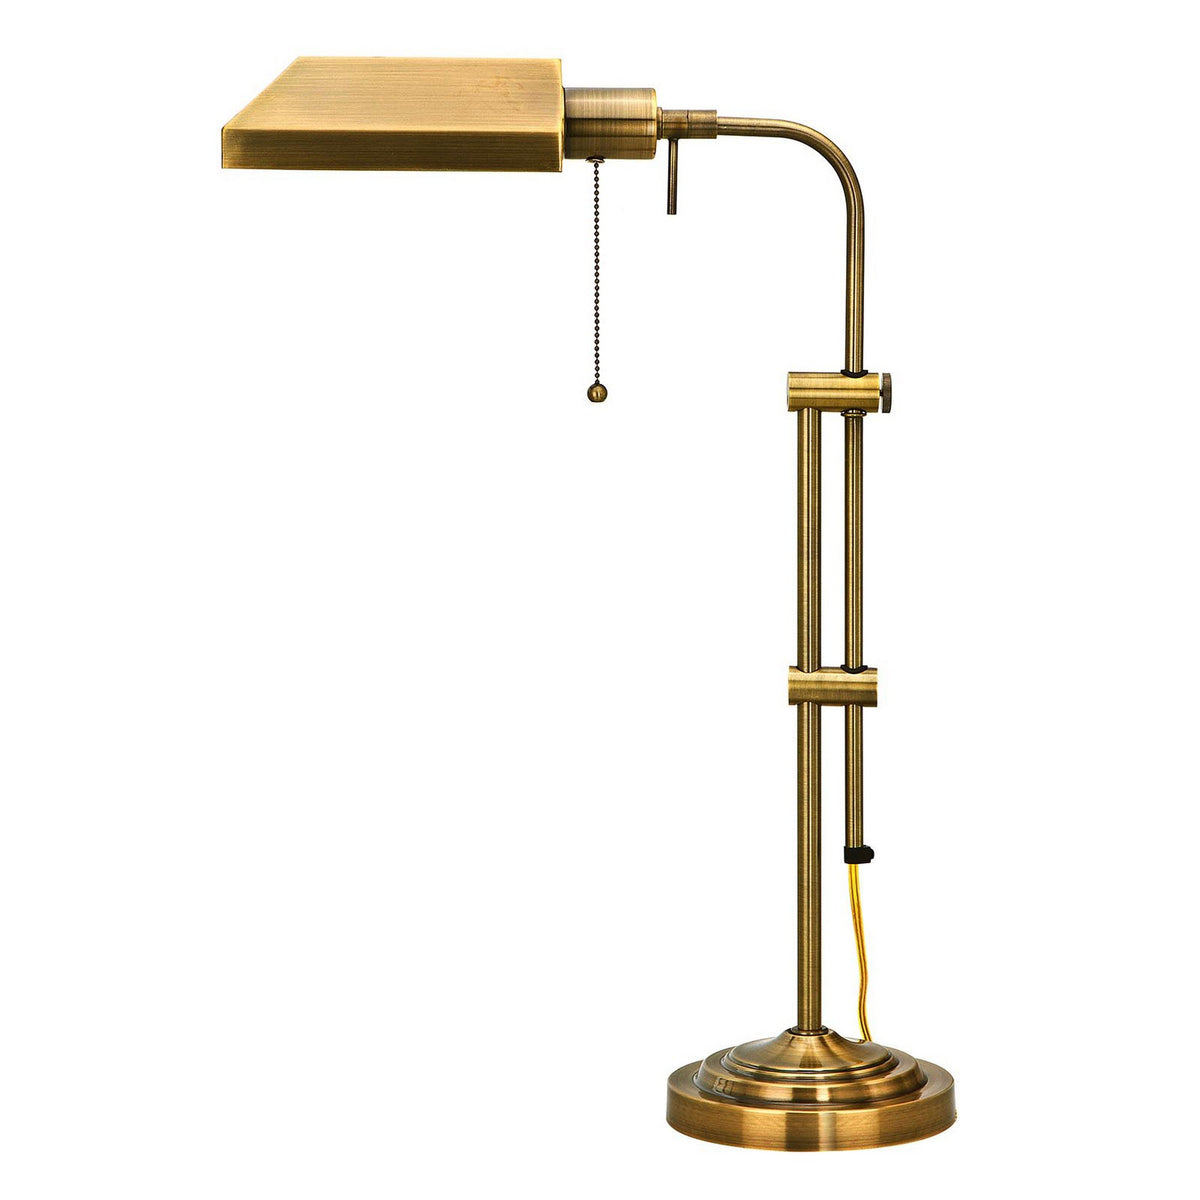 Metal Rectangular Desk Lamp with Adjustable Pole, Gold - BM225083